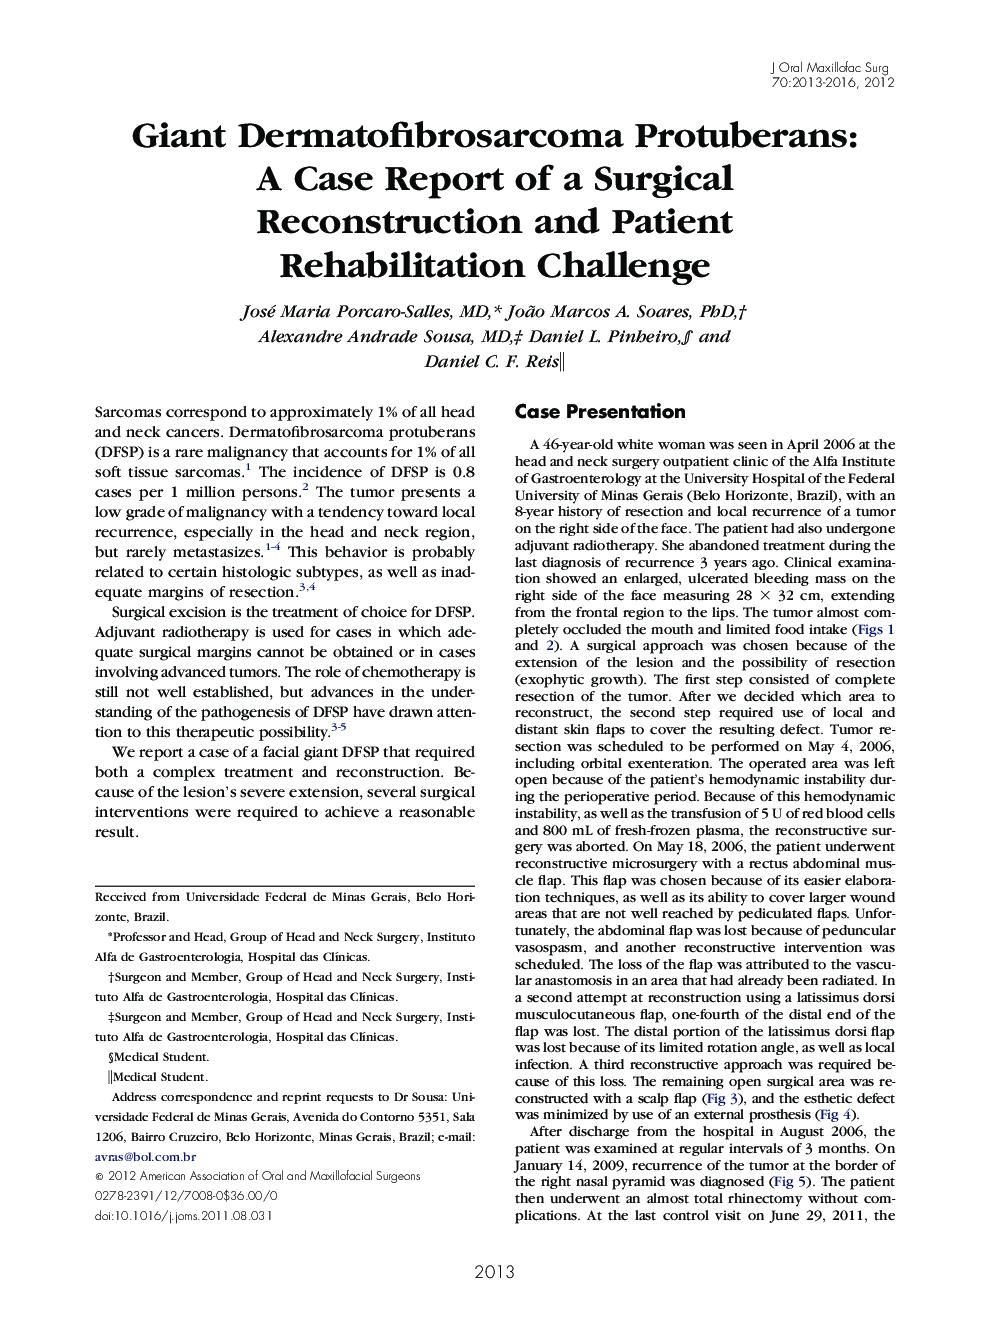 Giant Dermatofibrosarcoma Protuberans: A Case Report of a Surgical Reconstruction and Patient Rehabilitation Challenge